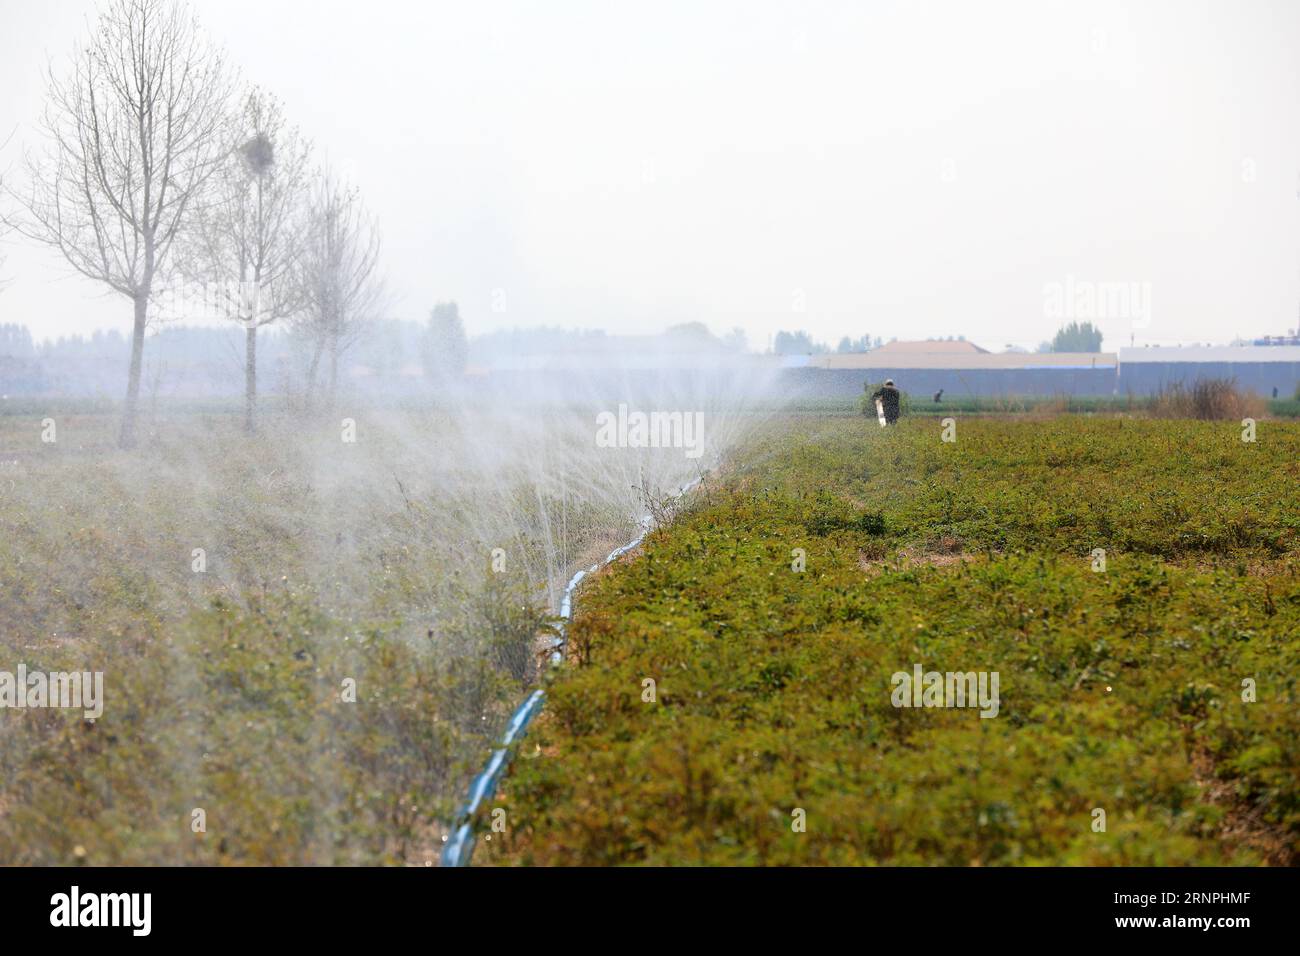 Farmers irrigate peony flower fields, North China Stock Photo